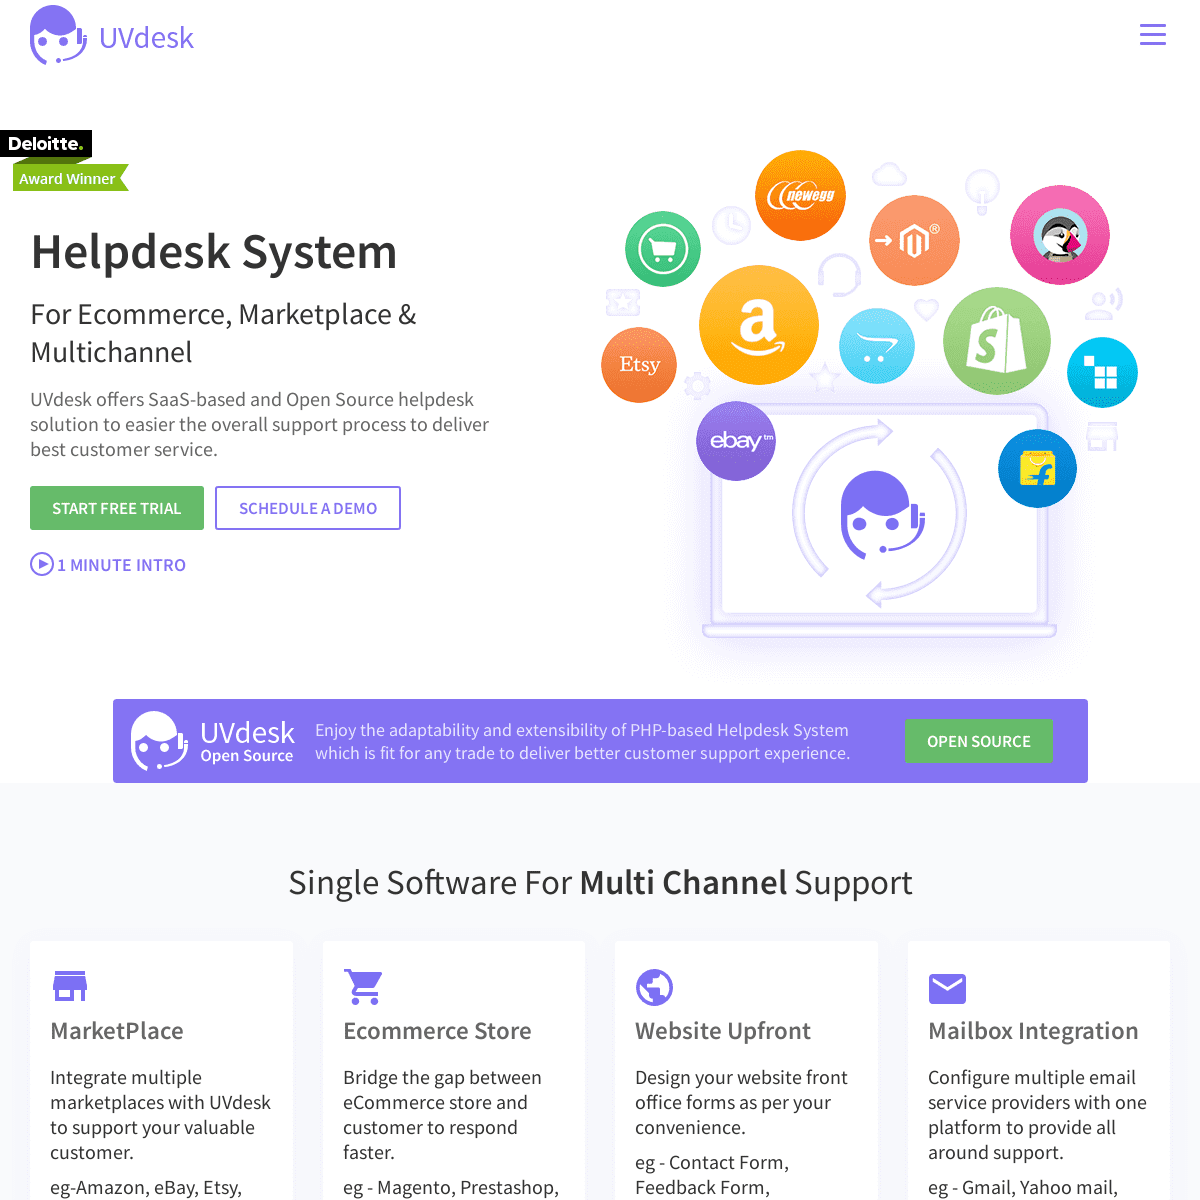 Open Source Helpdesk System for eCommerce, Marketplaces & Multichannel - UVdesk